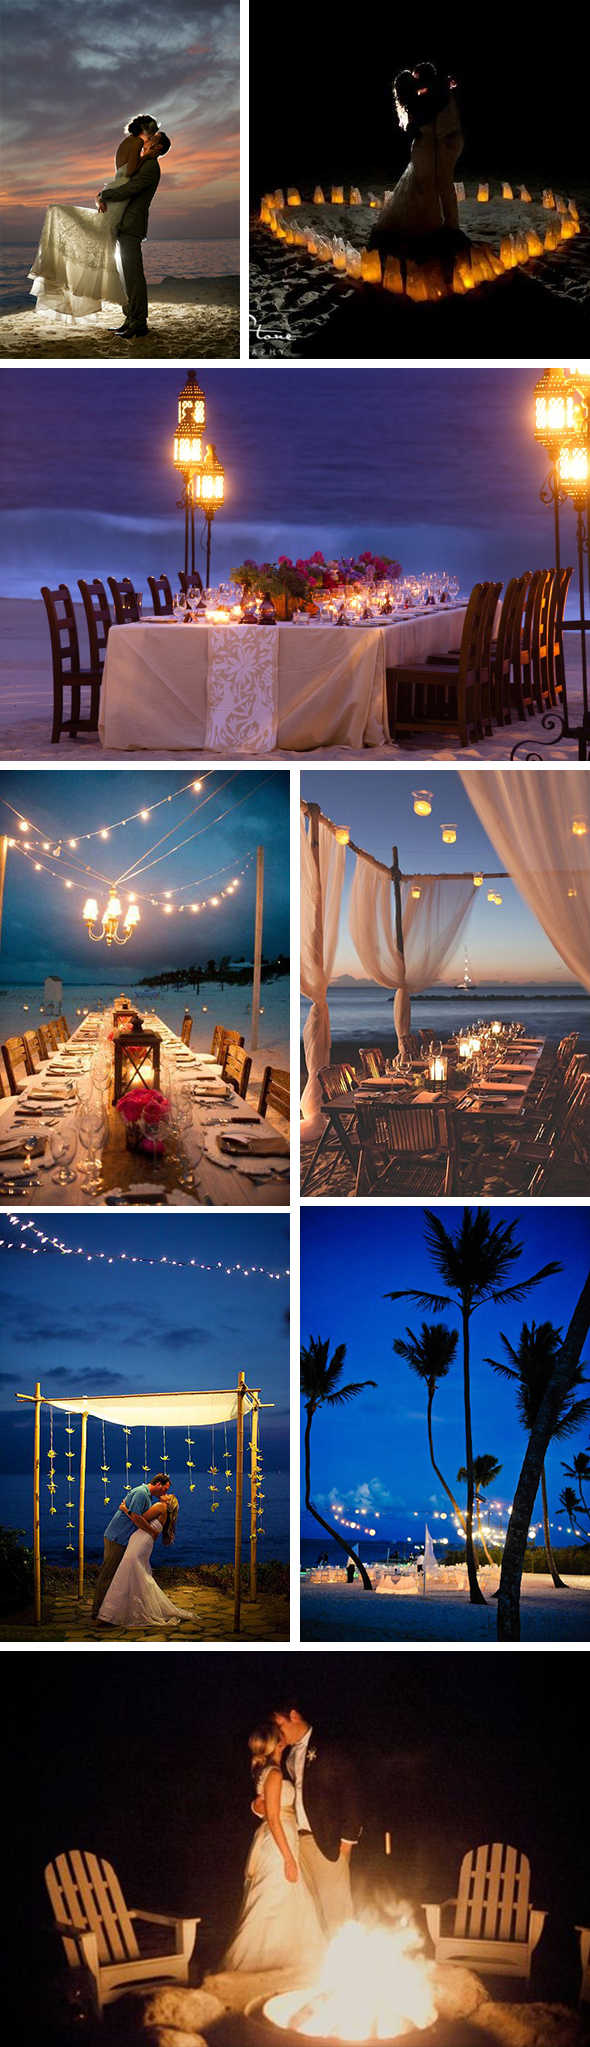 night beach weddings